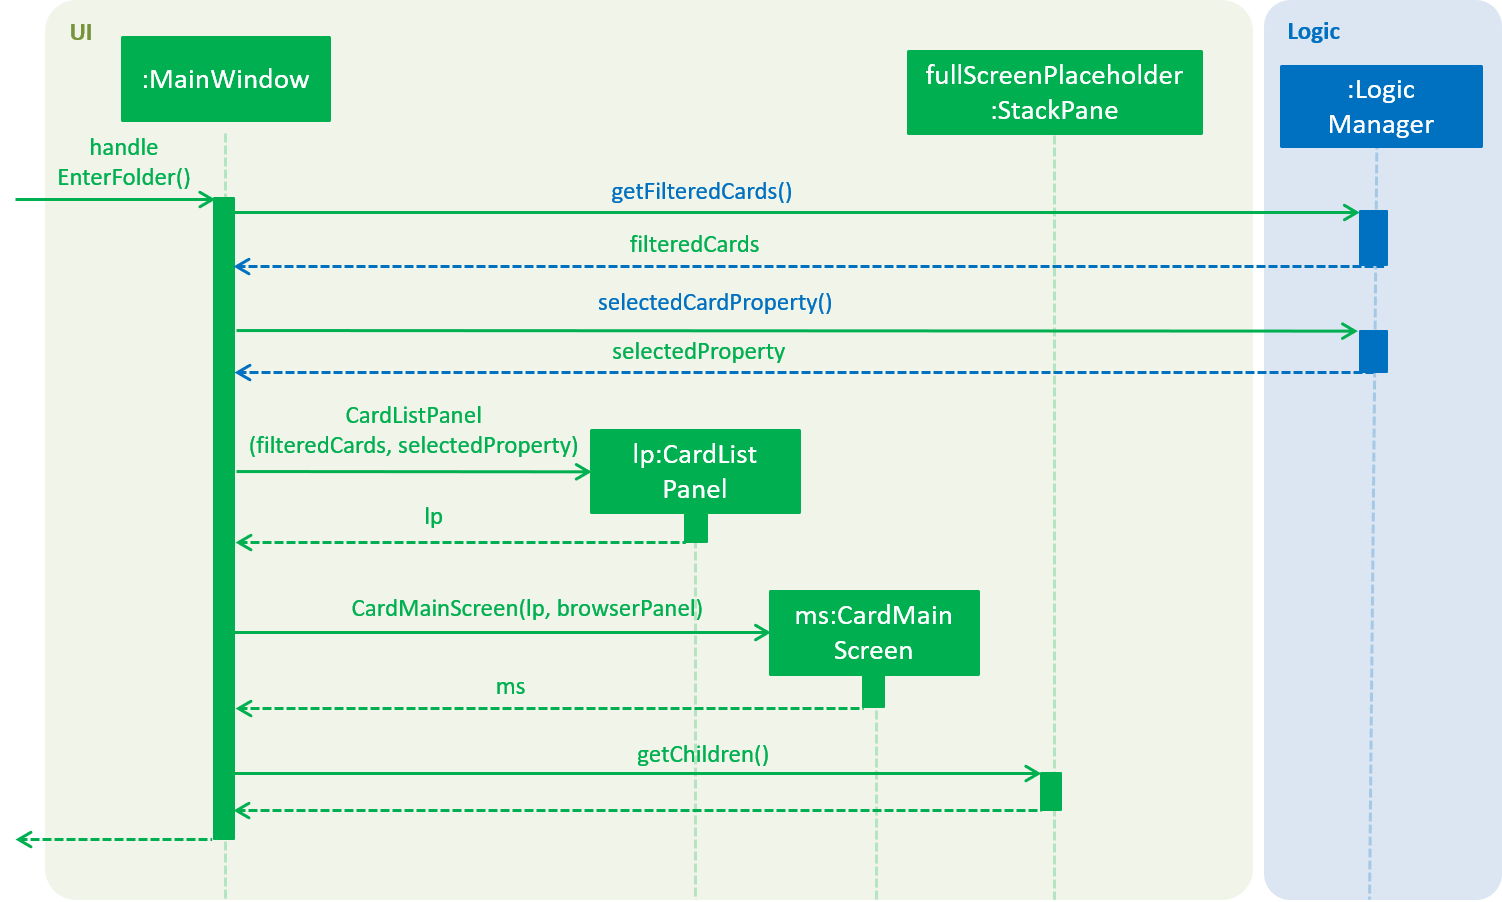 EnterFolderGUISequenceDiagram